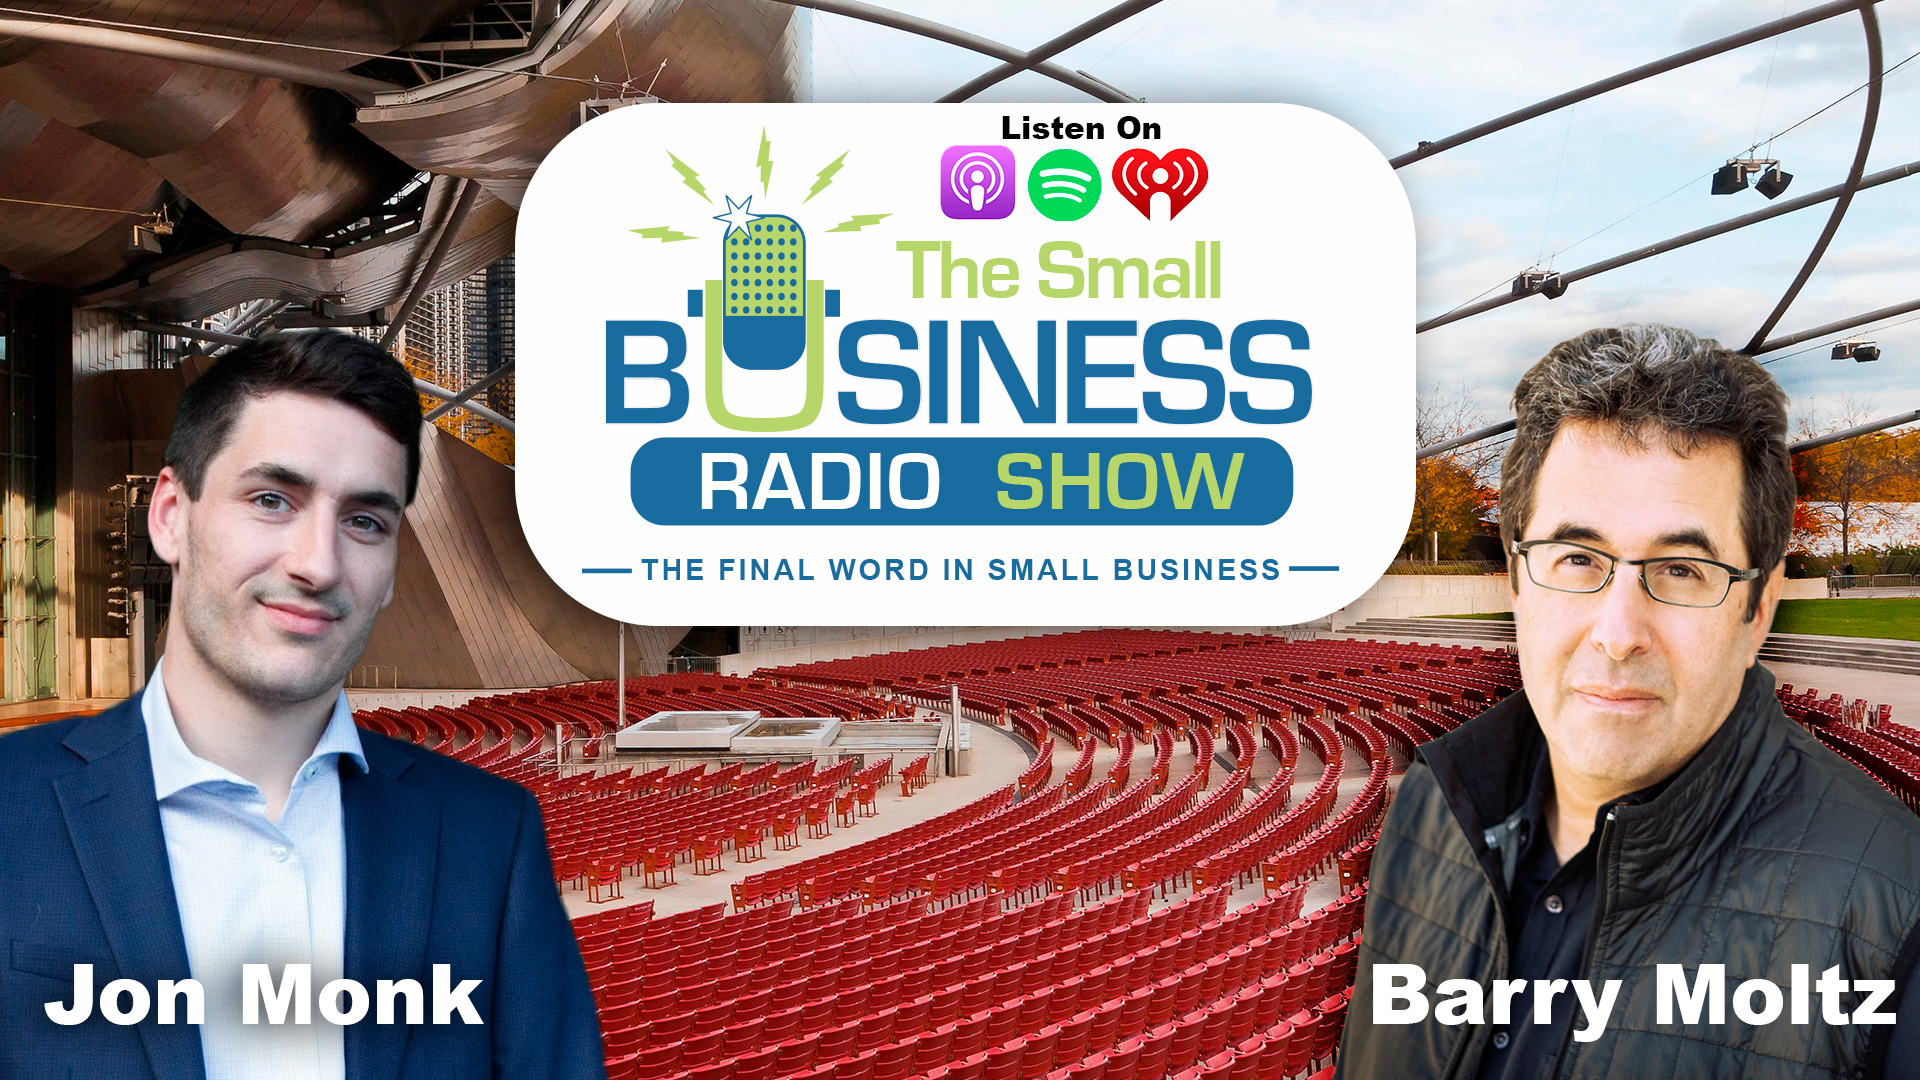 Jon Monk on The Small Business Radio Show